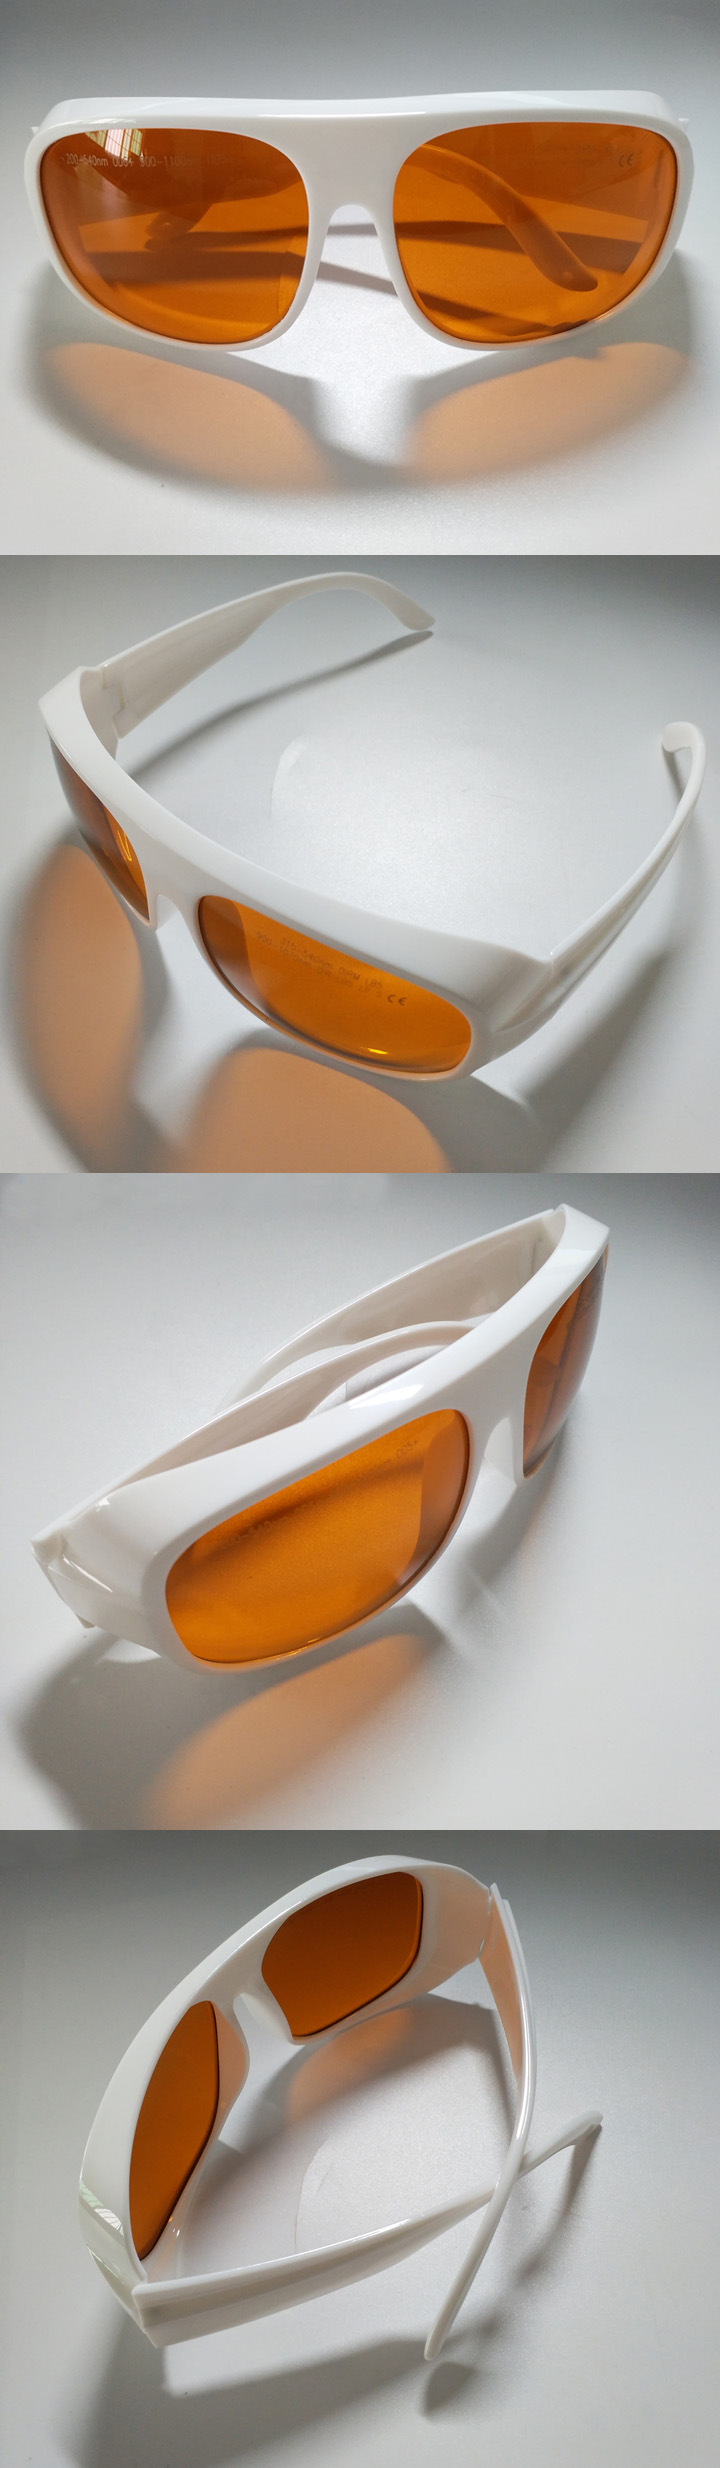 lunettes laser 900-1100 nm